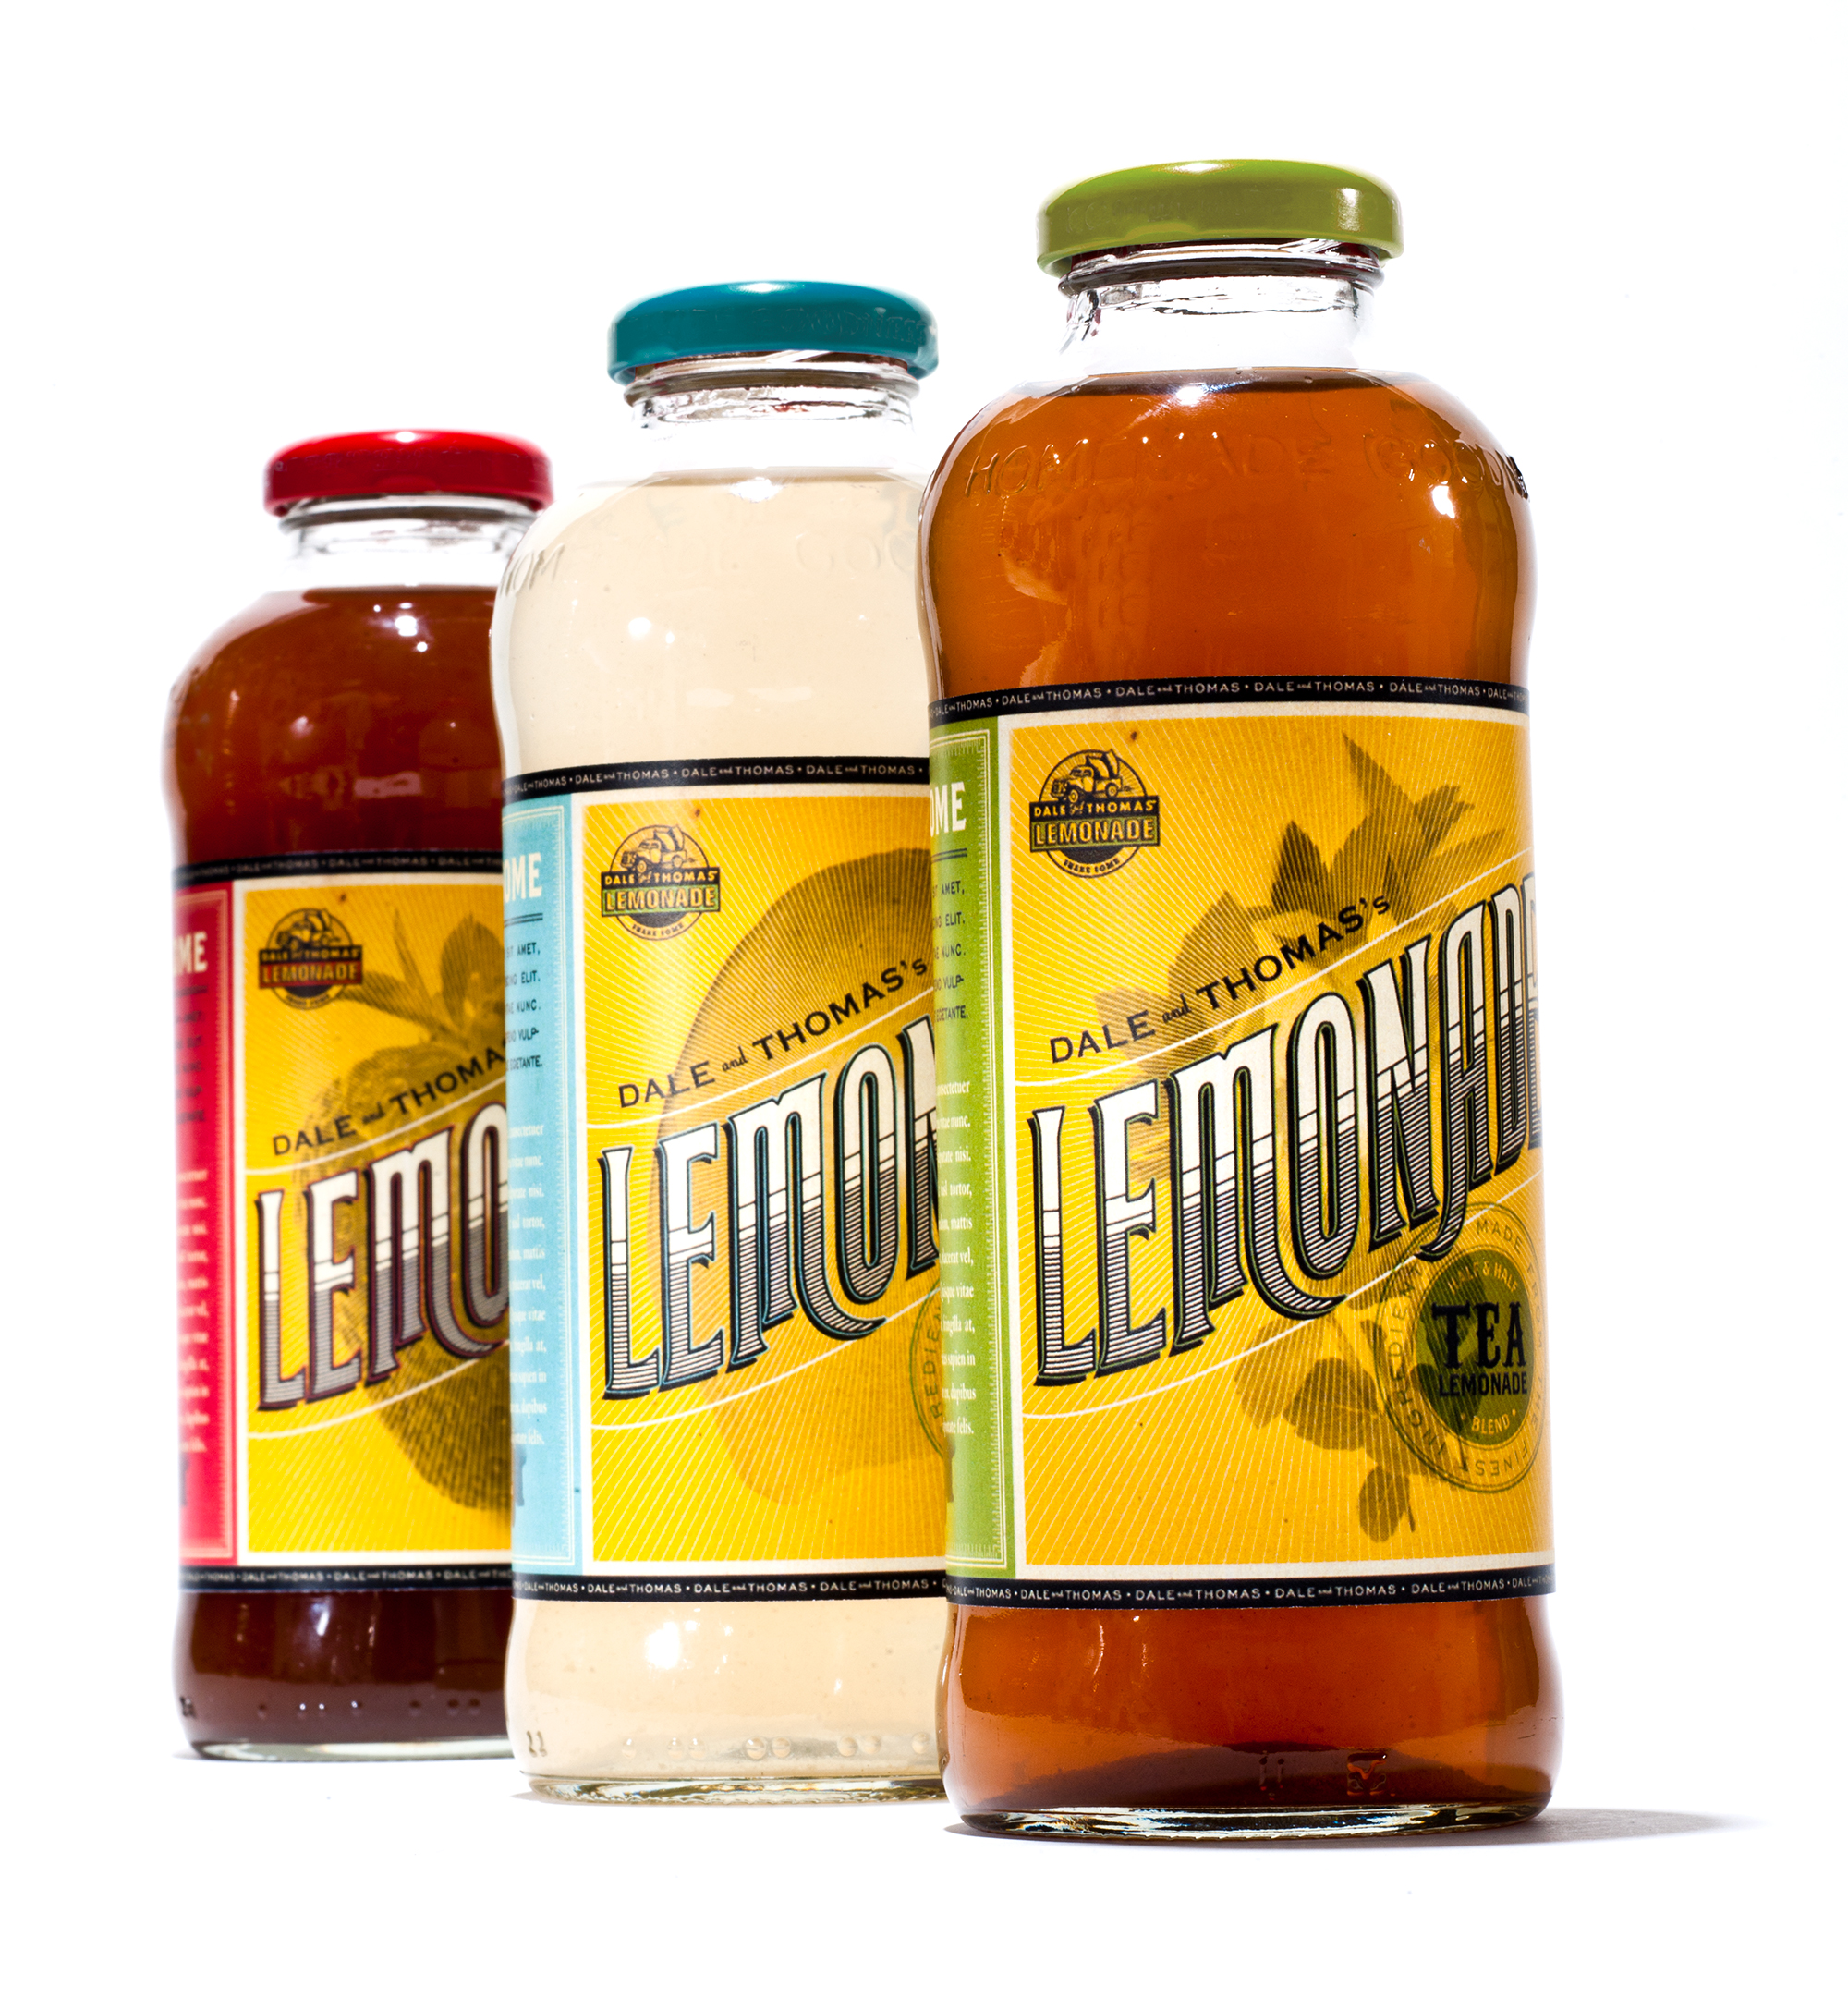 Label Design for Dale & Thomas Lemonade